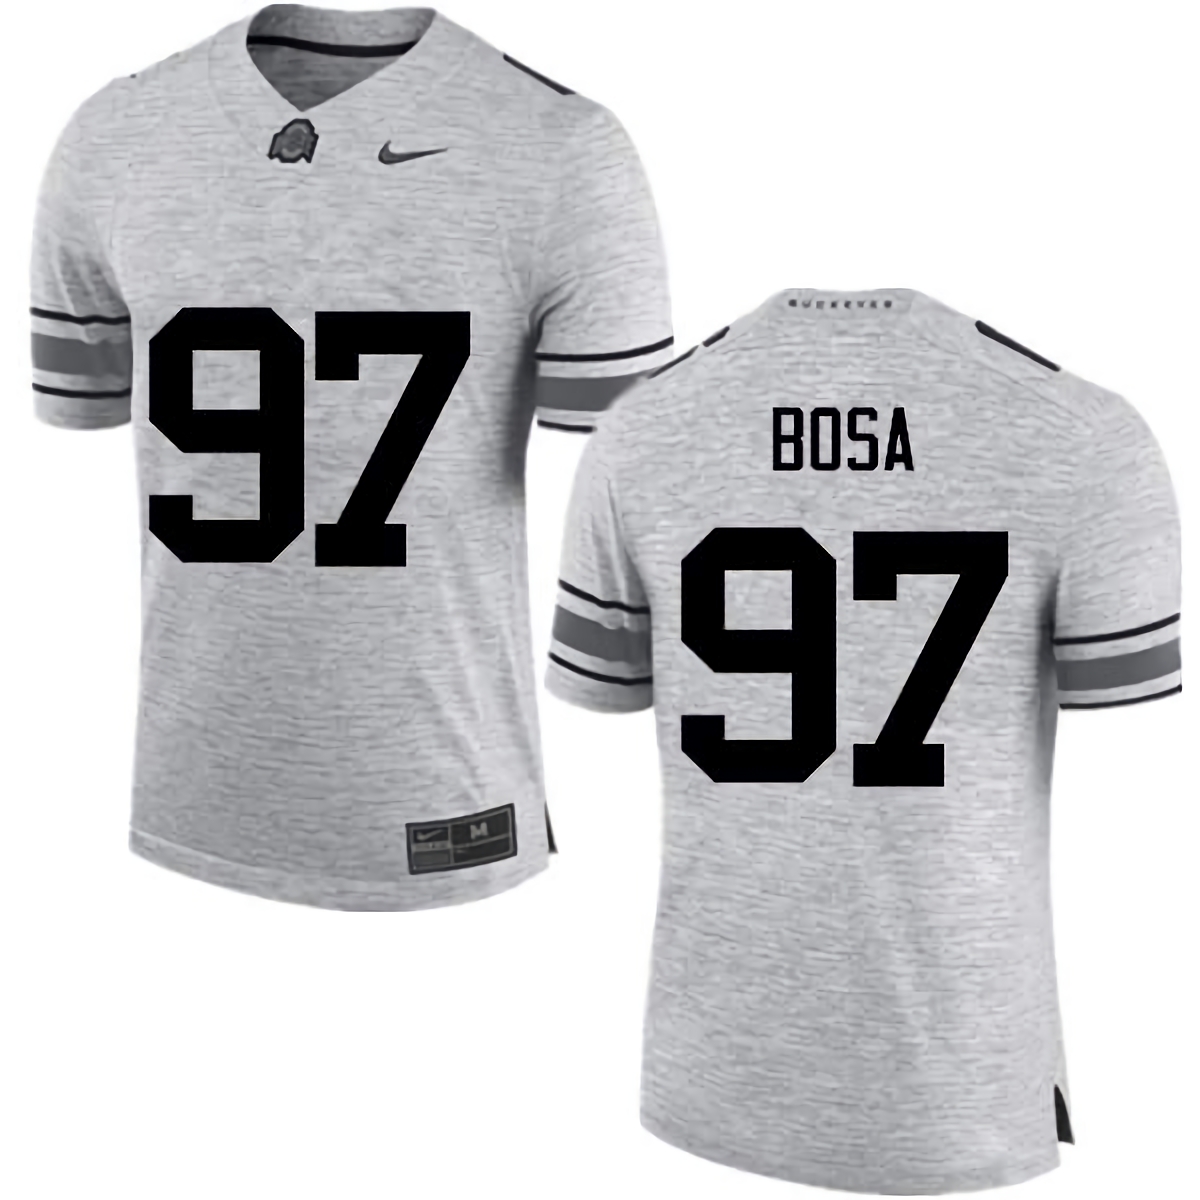 Joey Bosa Ohio State Buckeyes Men's NCAA #97 Nike Gray College Stitched Football Jersey OGI2156RR